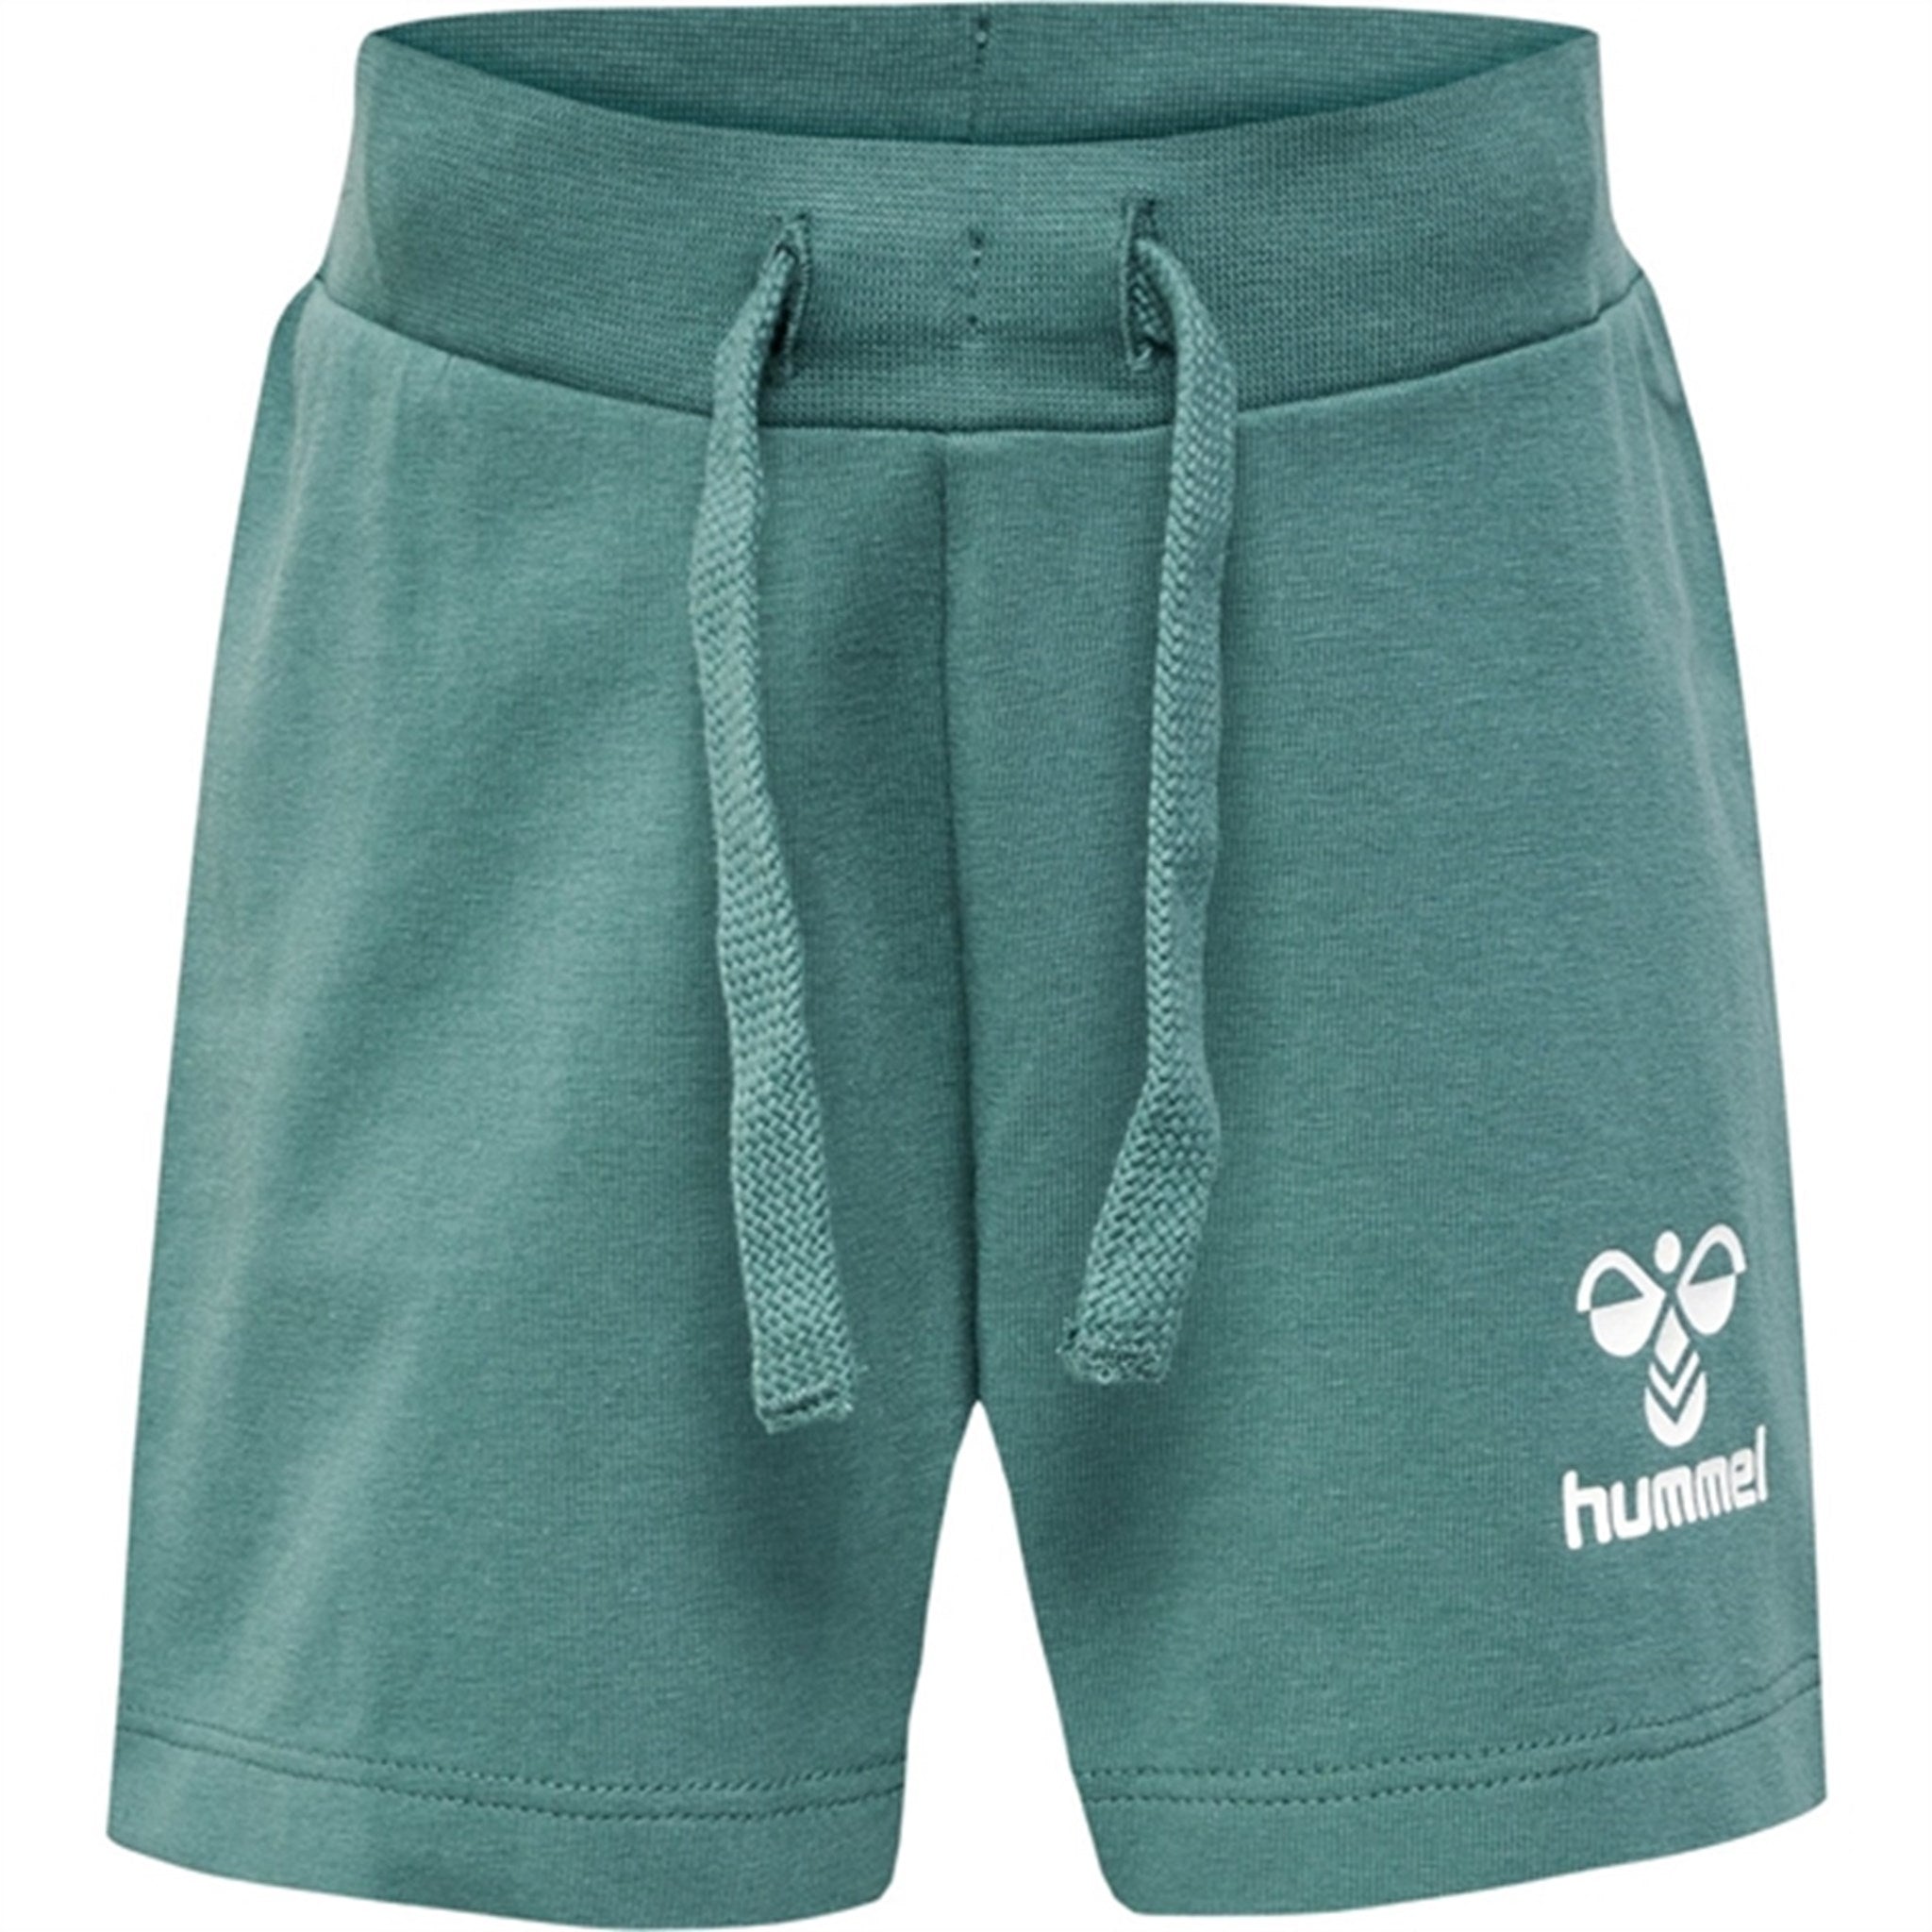 Hummel Sea Pine Azur Shorts - Str. 62